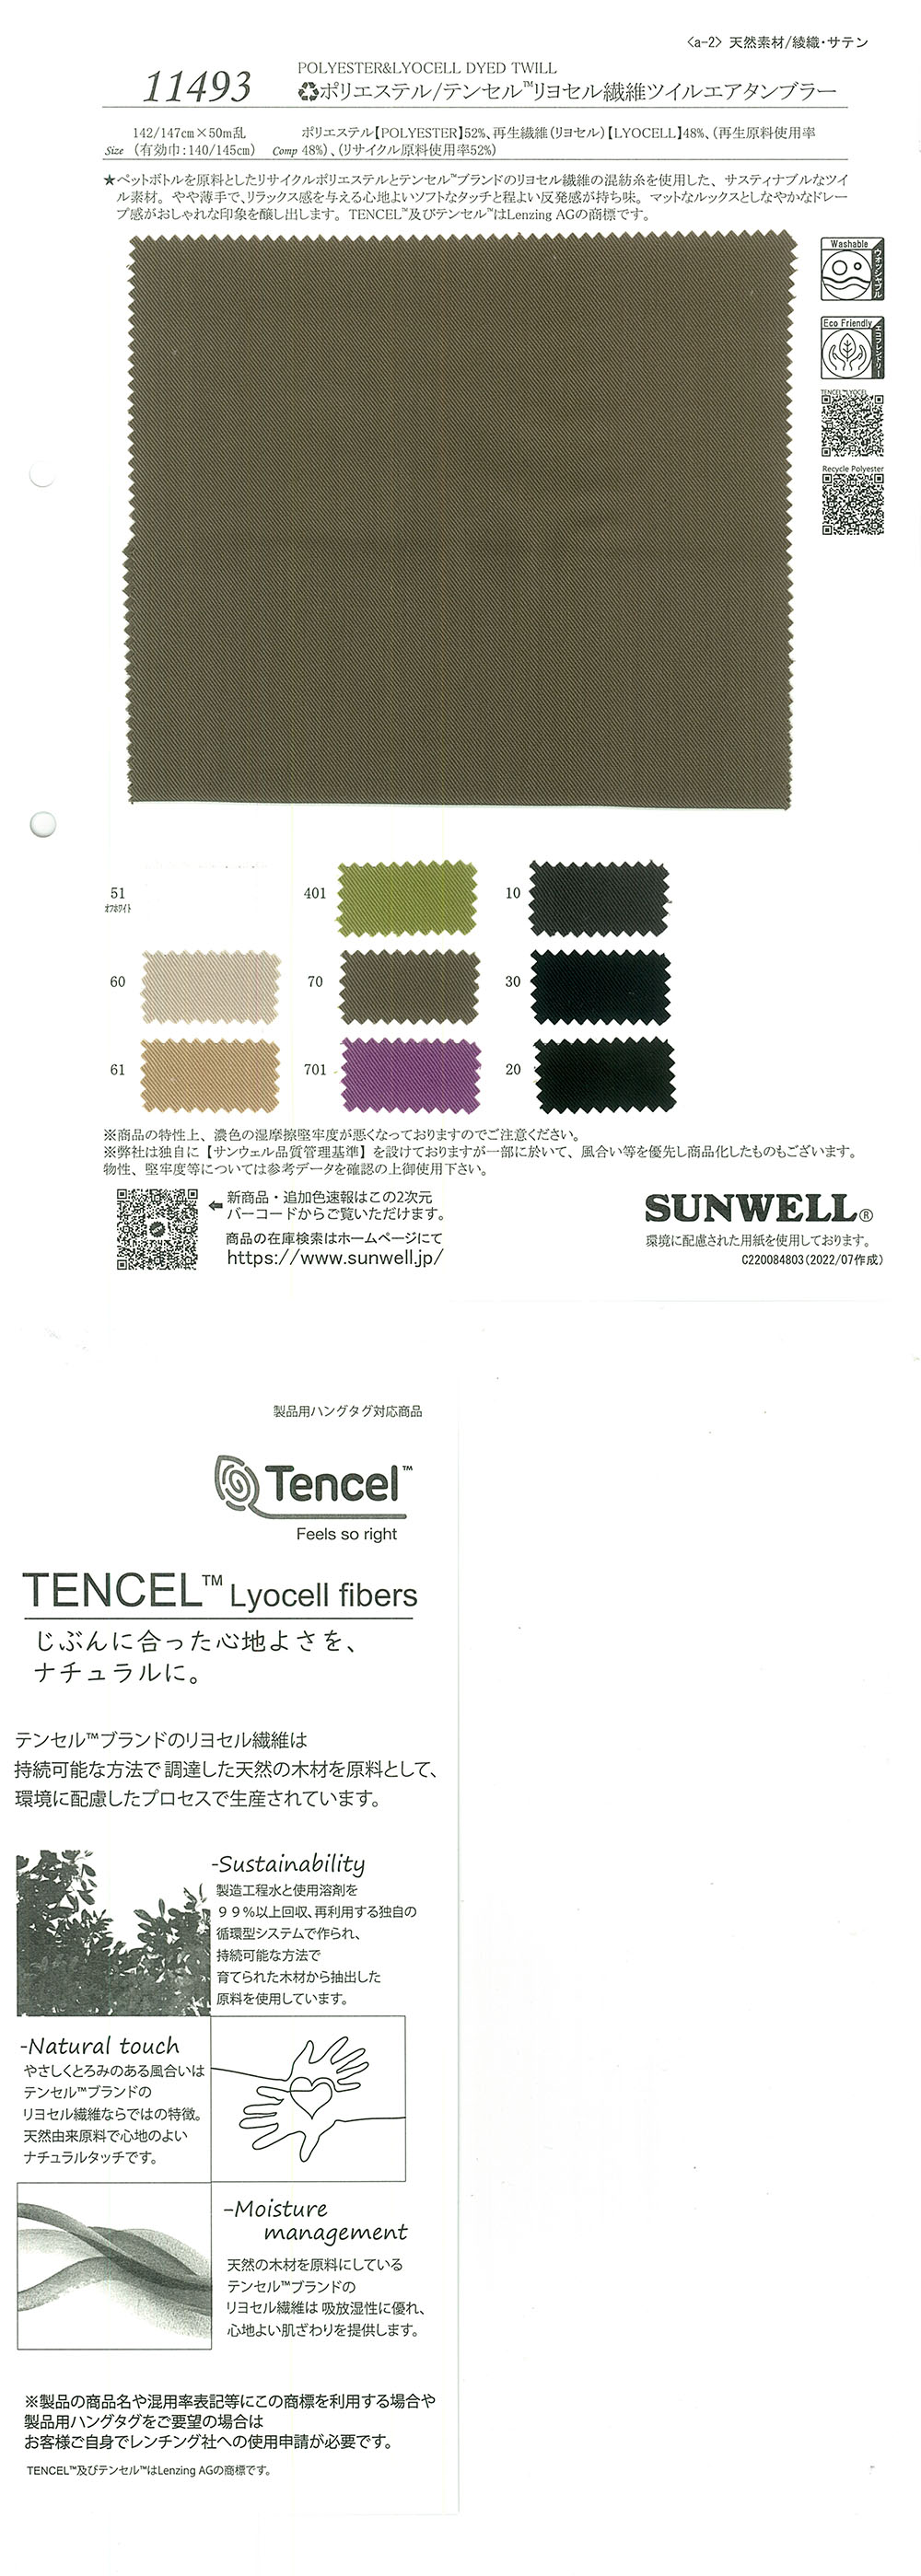 11493 (Li) Polyester/Tencel (TM) Verre à Air En Sergé De Fibres De Lyocell[Fabrication De Textile] SUNWELL